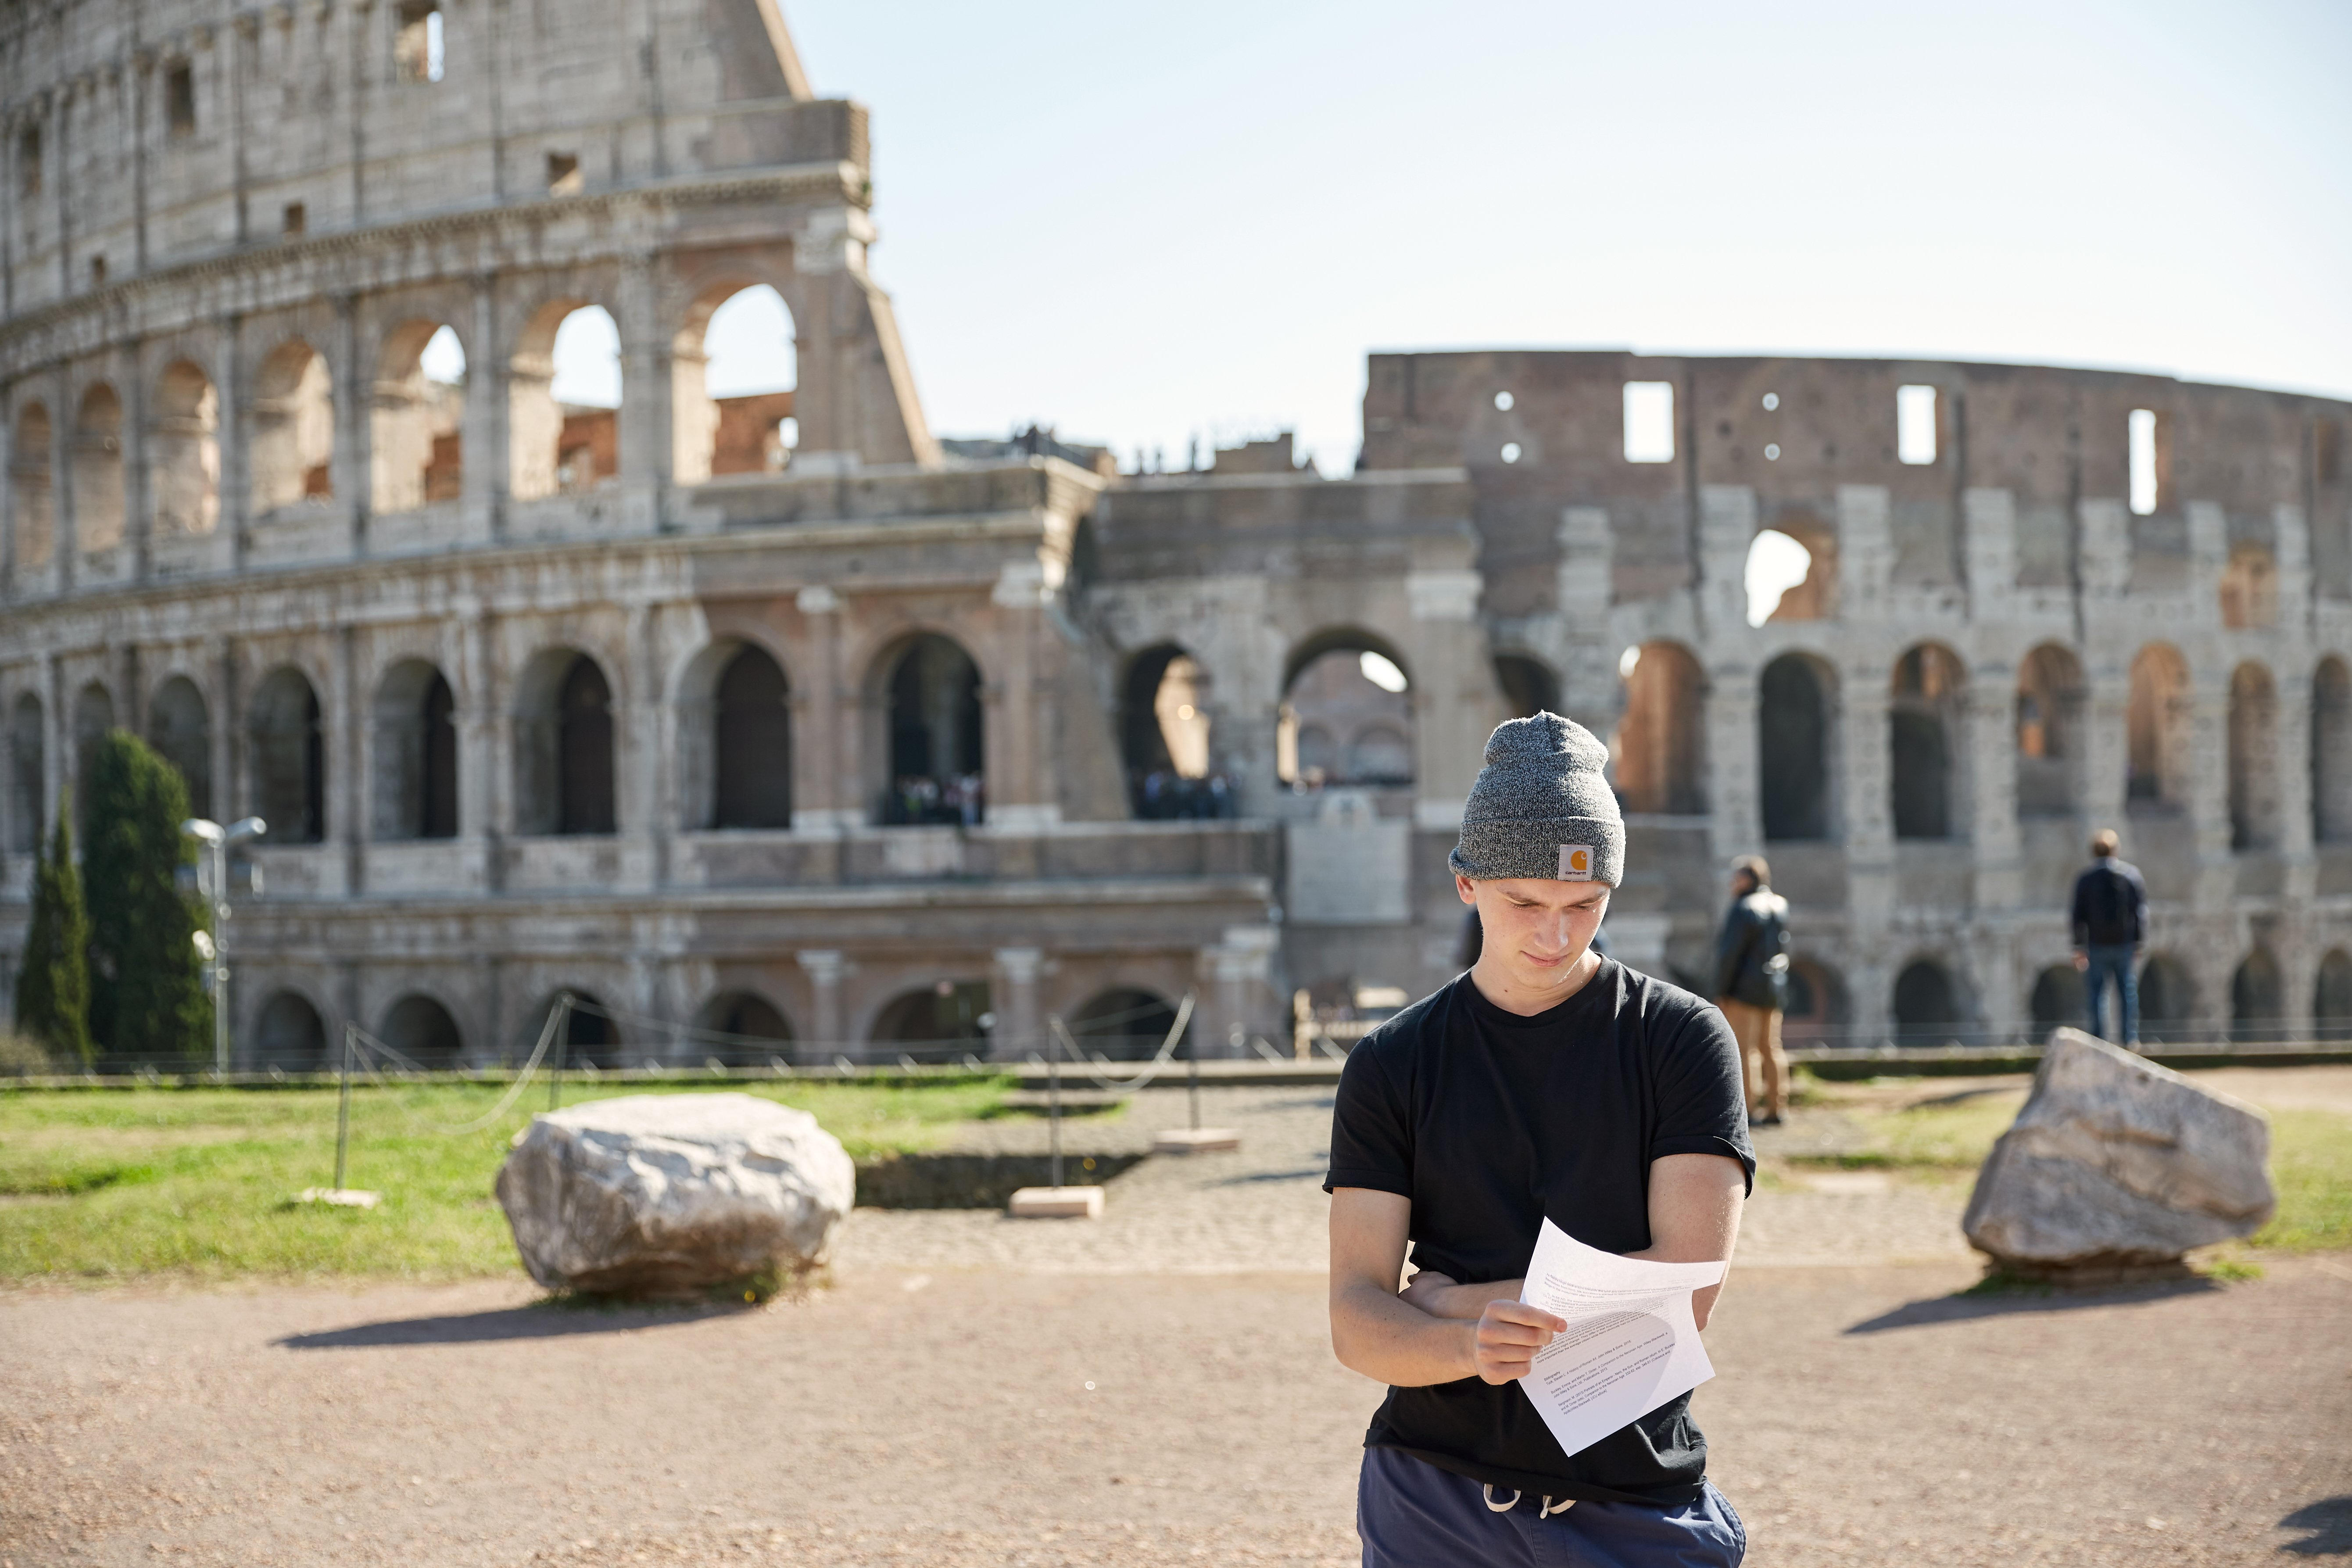 Jan 11 study art history in Rome